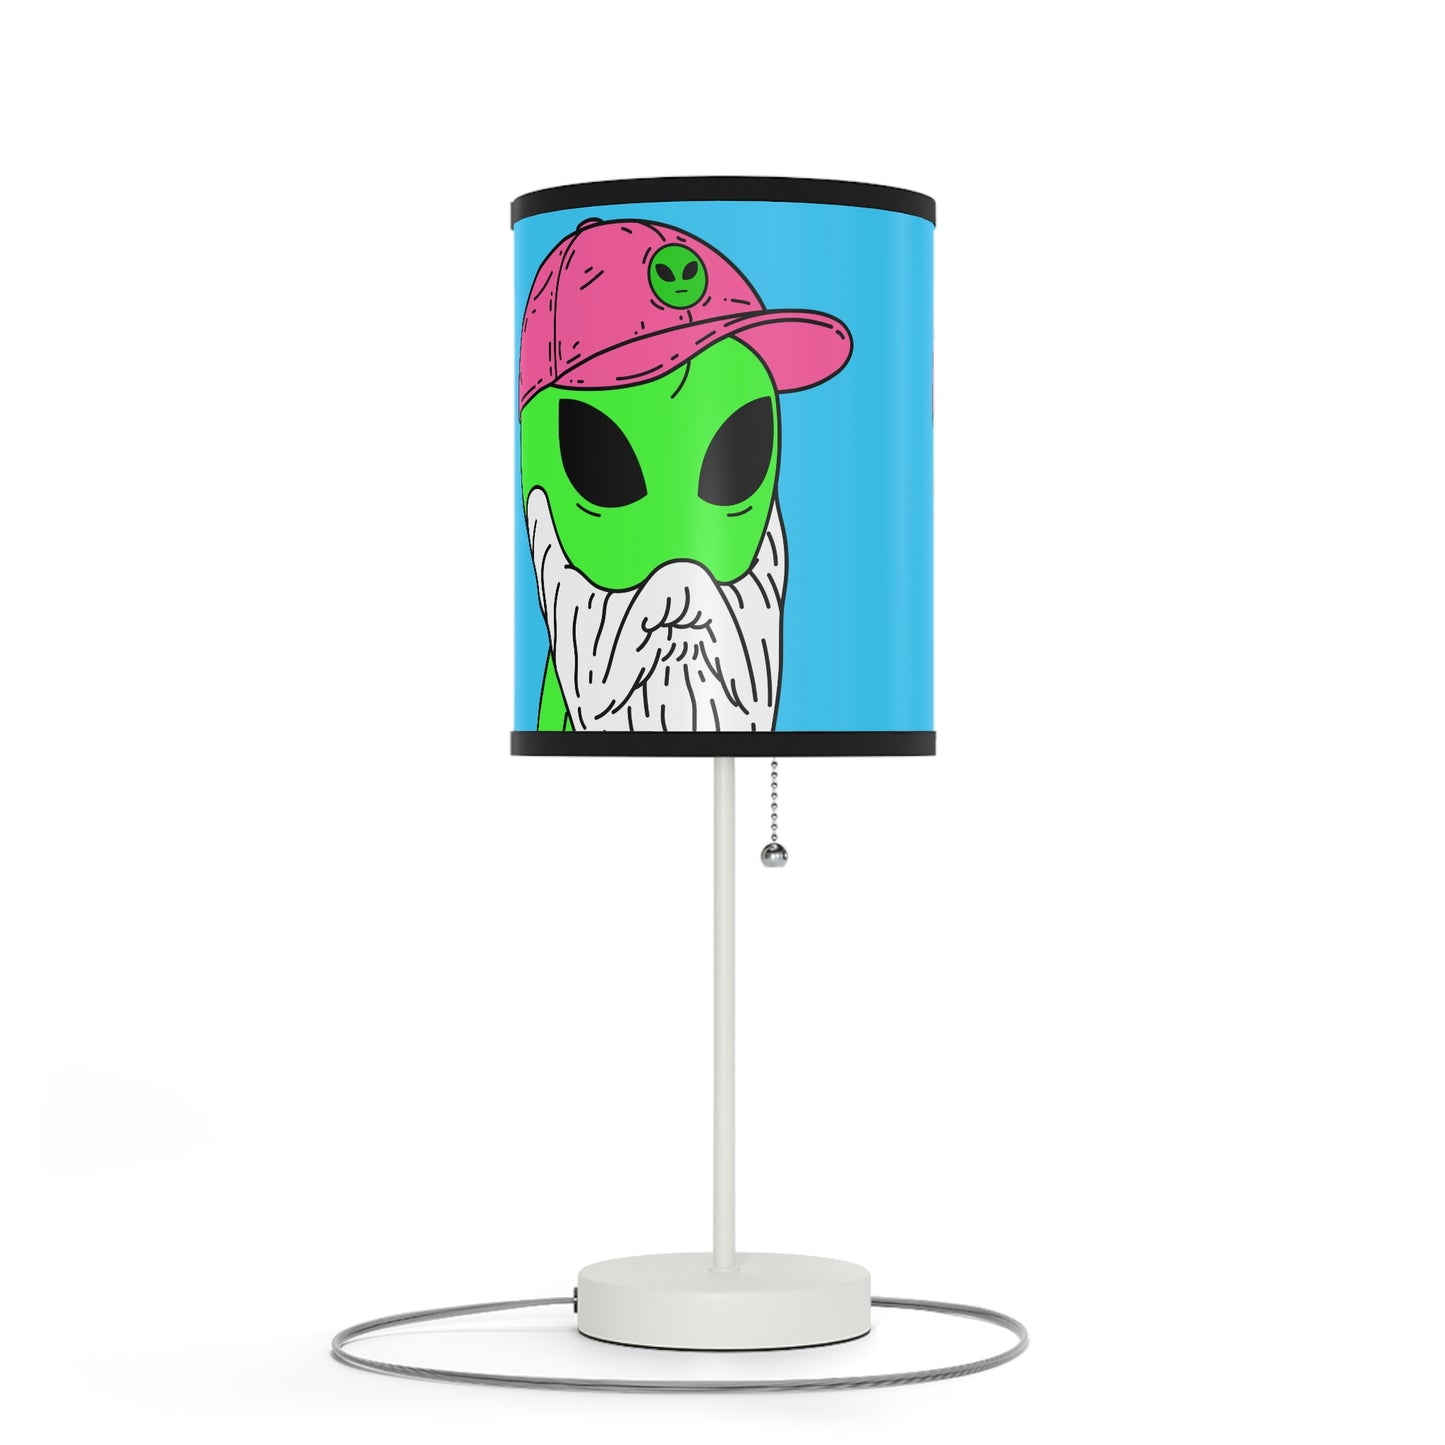 Alien Old Man Wizard Beard Visitor Cartoon Lamp on a Stand, US|CA plug